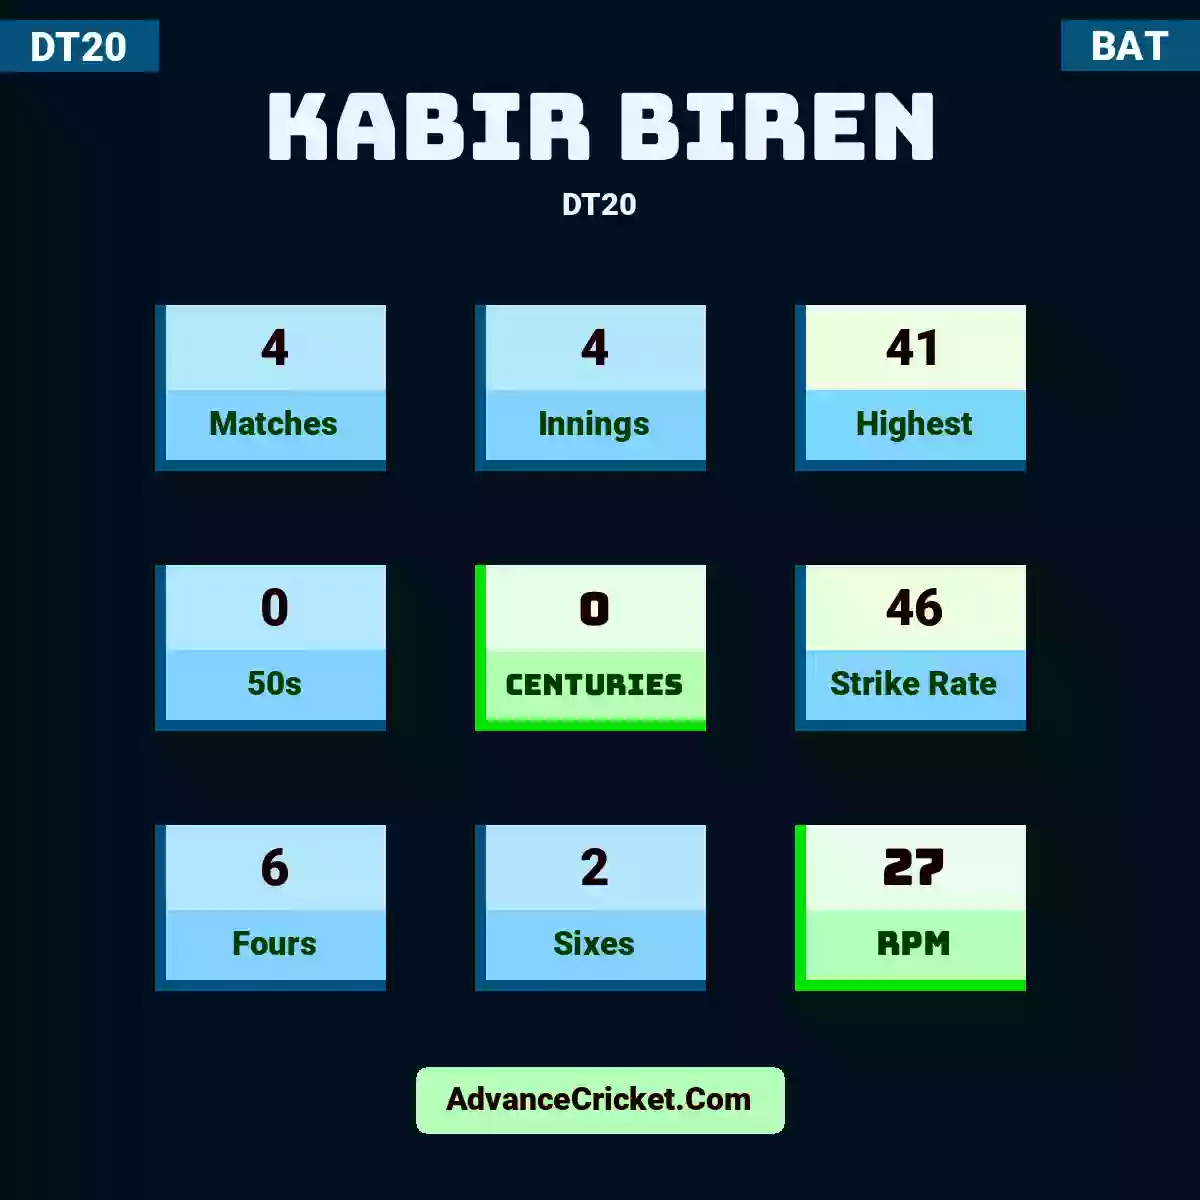 Kabir Biren DT20 , Kabir Biren played 4 matches, scored 41 runs as highest, 0 half-centuries, and 0 centuries, with a strike rate of 46. K.Biren hit 6 fours and 2 sixes, with an RPM of 27.